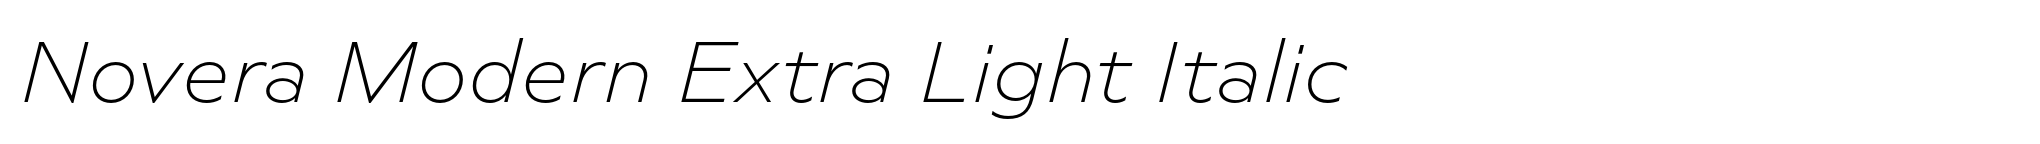 Novera Modern Extra Light Italic image